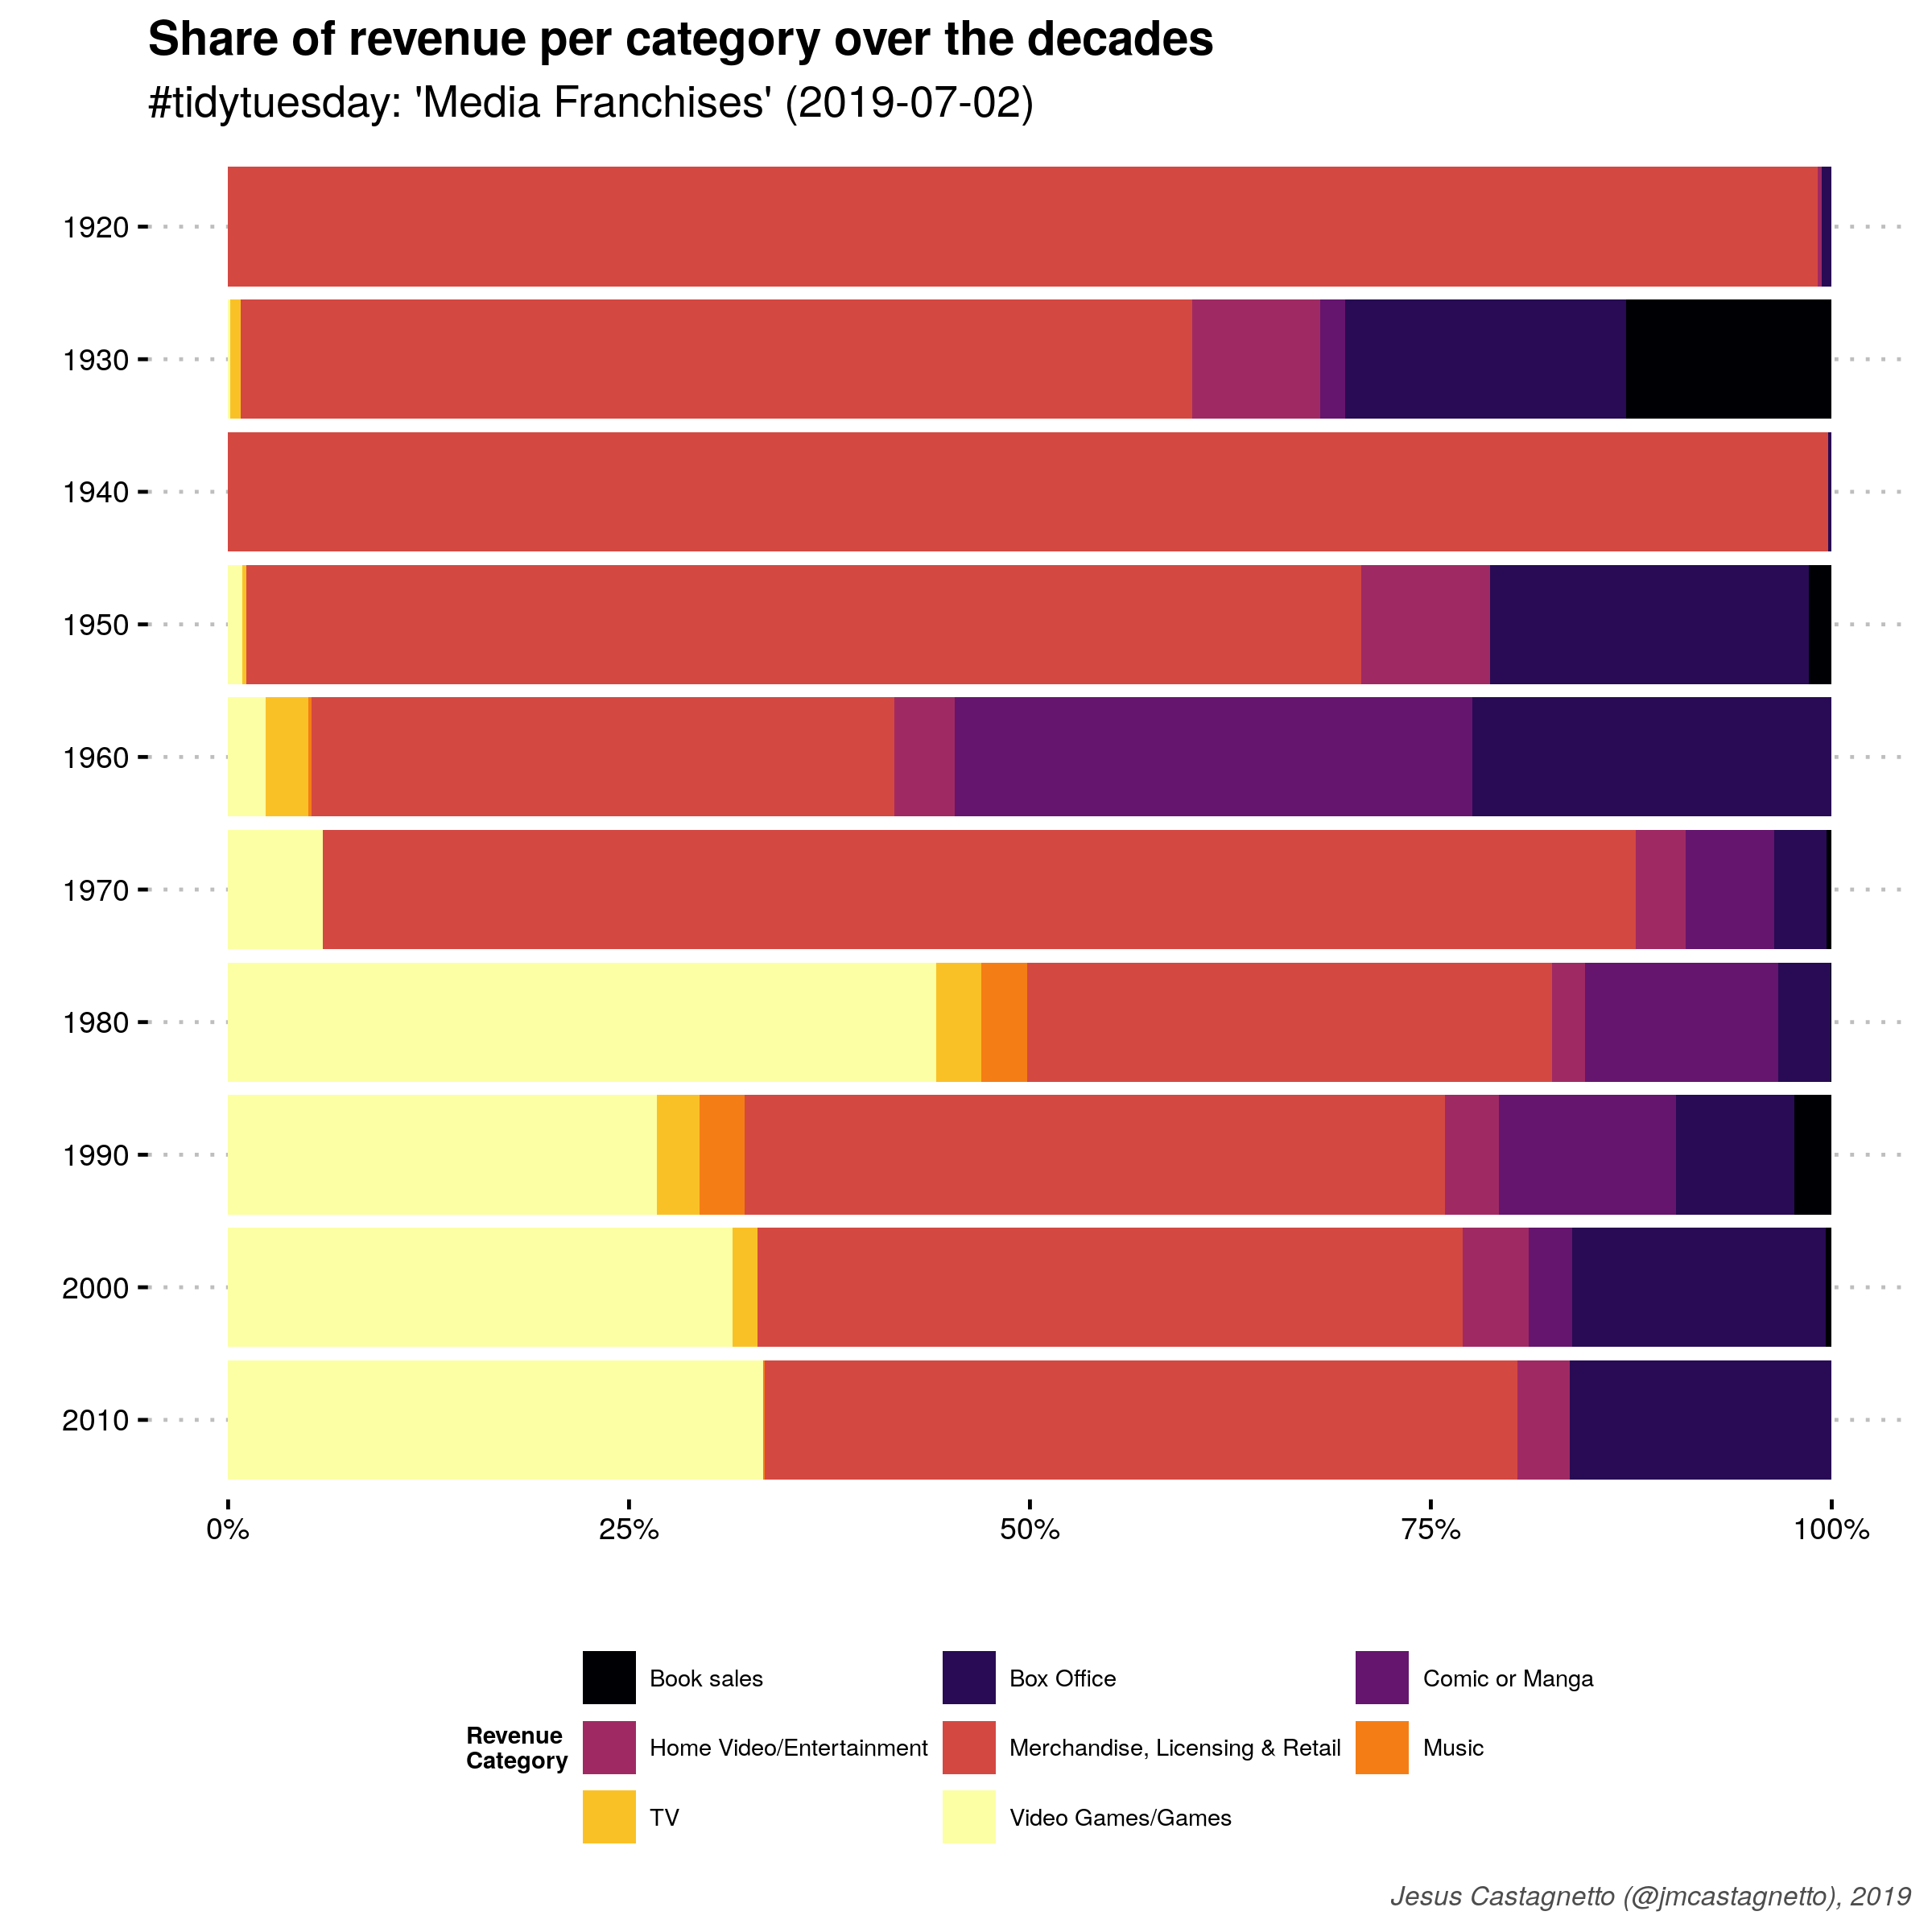 Share of revenue per category over the decades